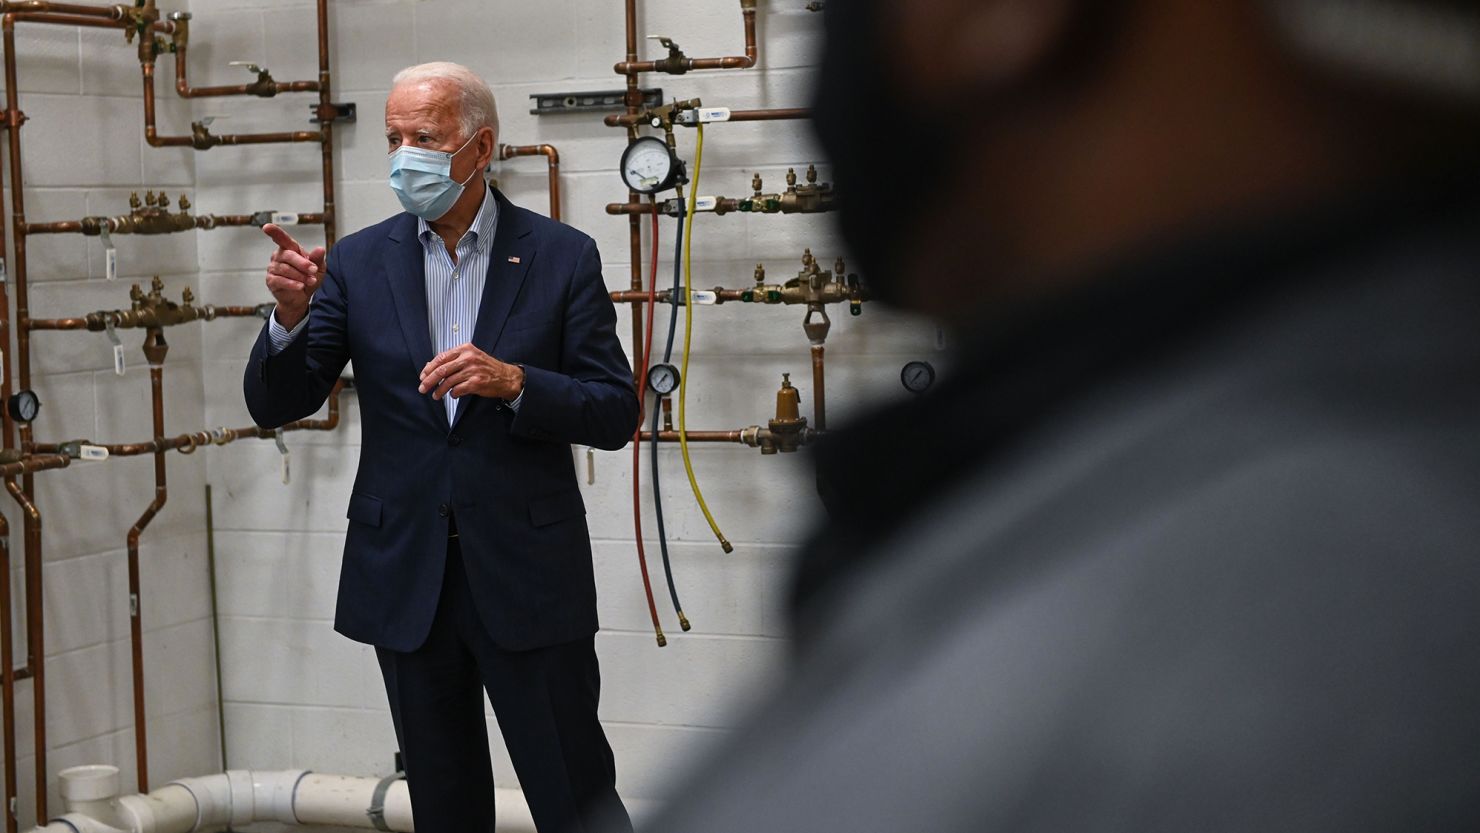 Joe Biden tours a local plumbers union training center in Erie, Pennsylvania on October 10, 2020. 